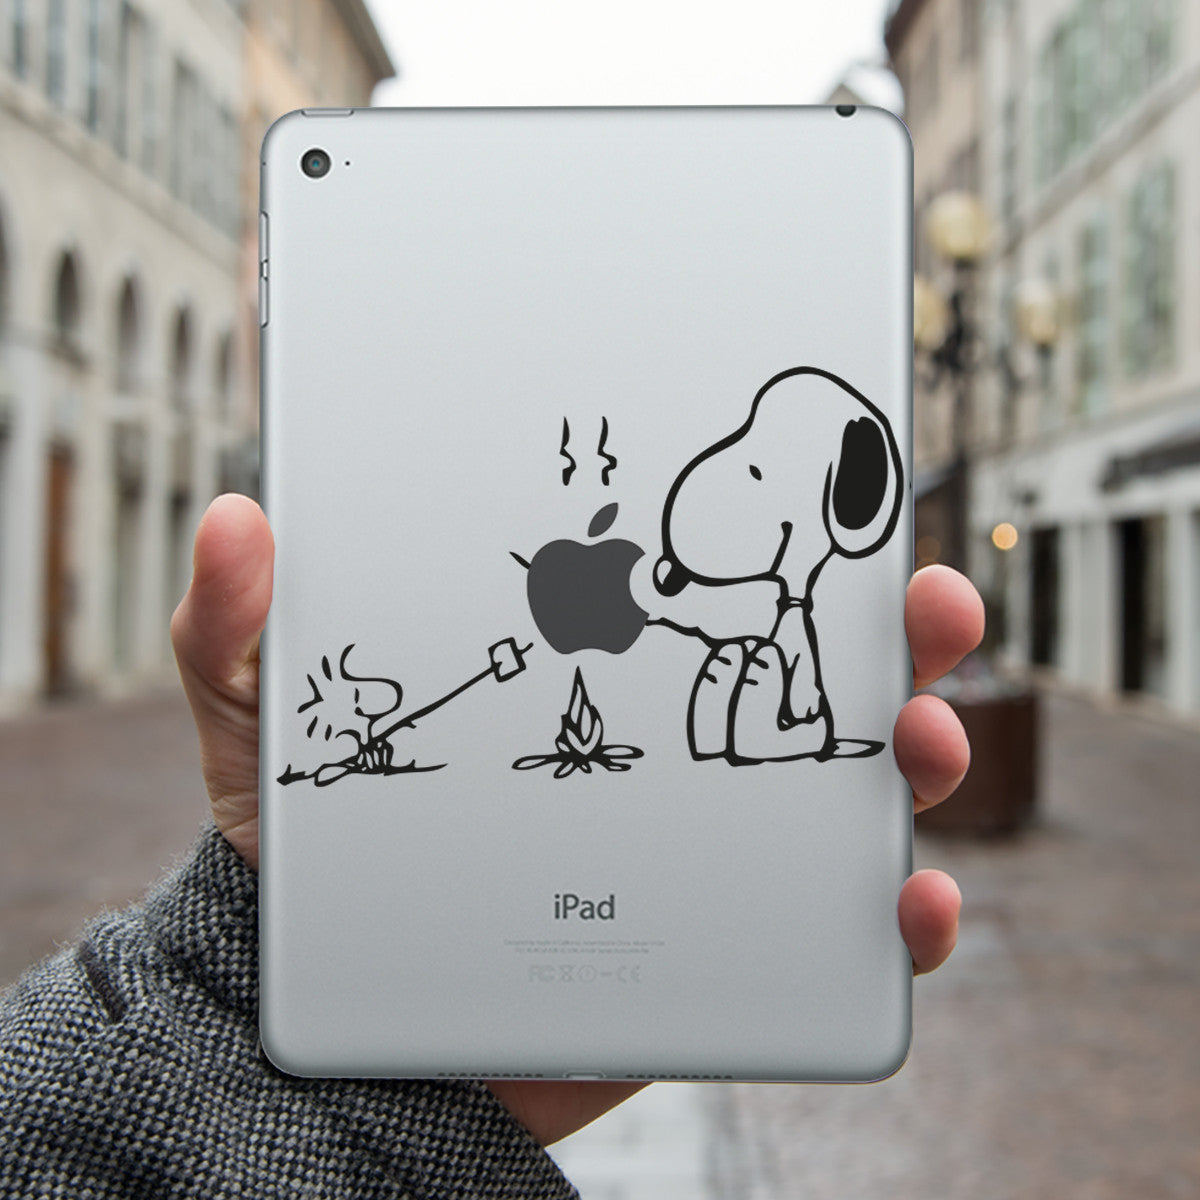 Snoopy iPad Decal